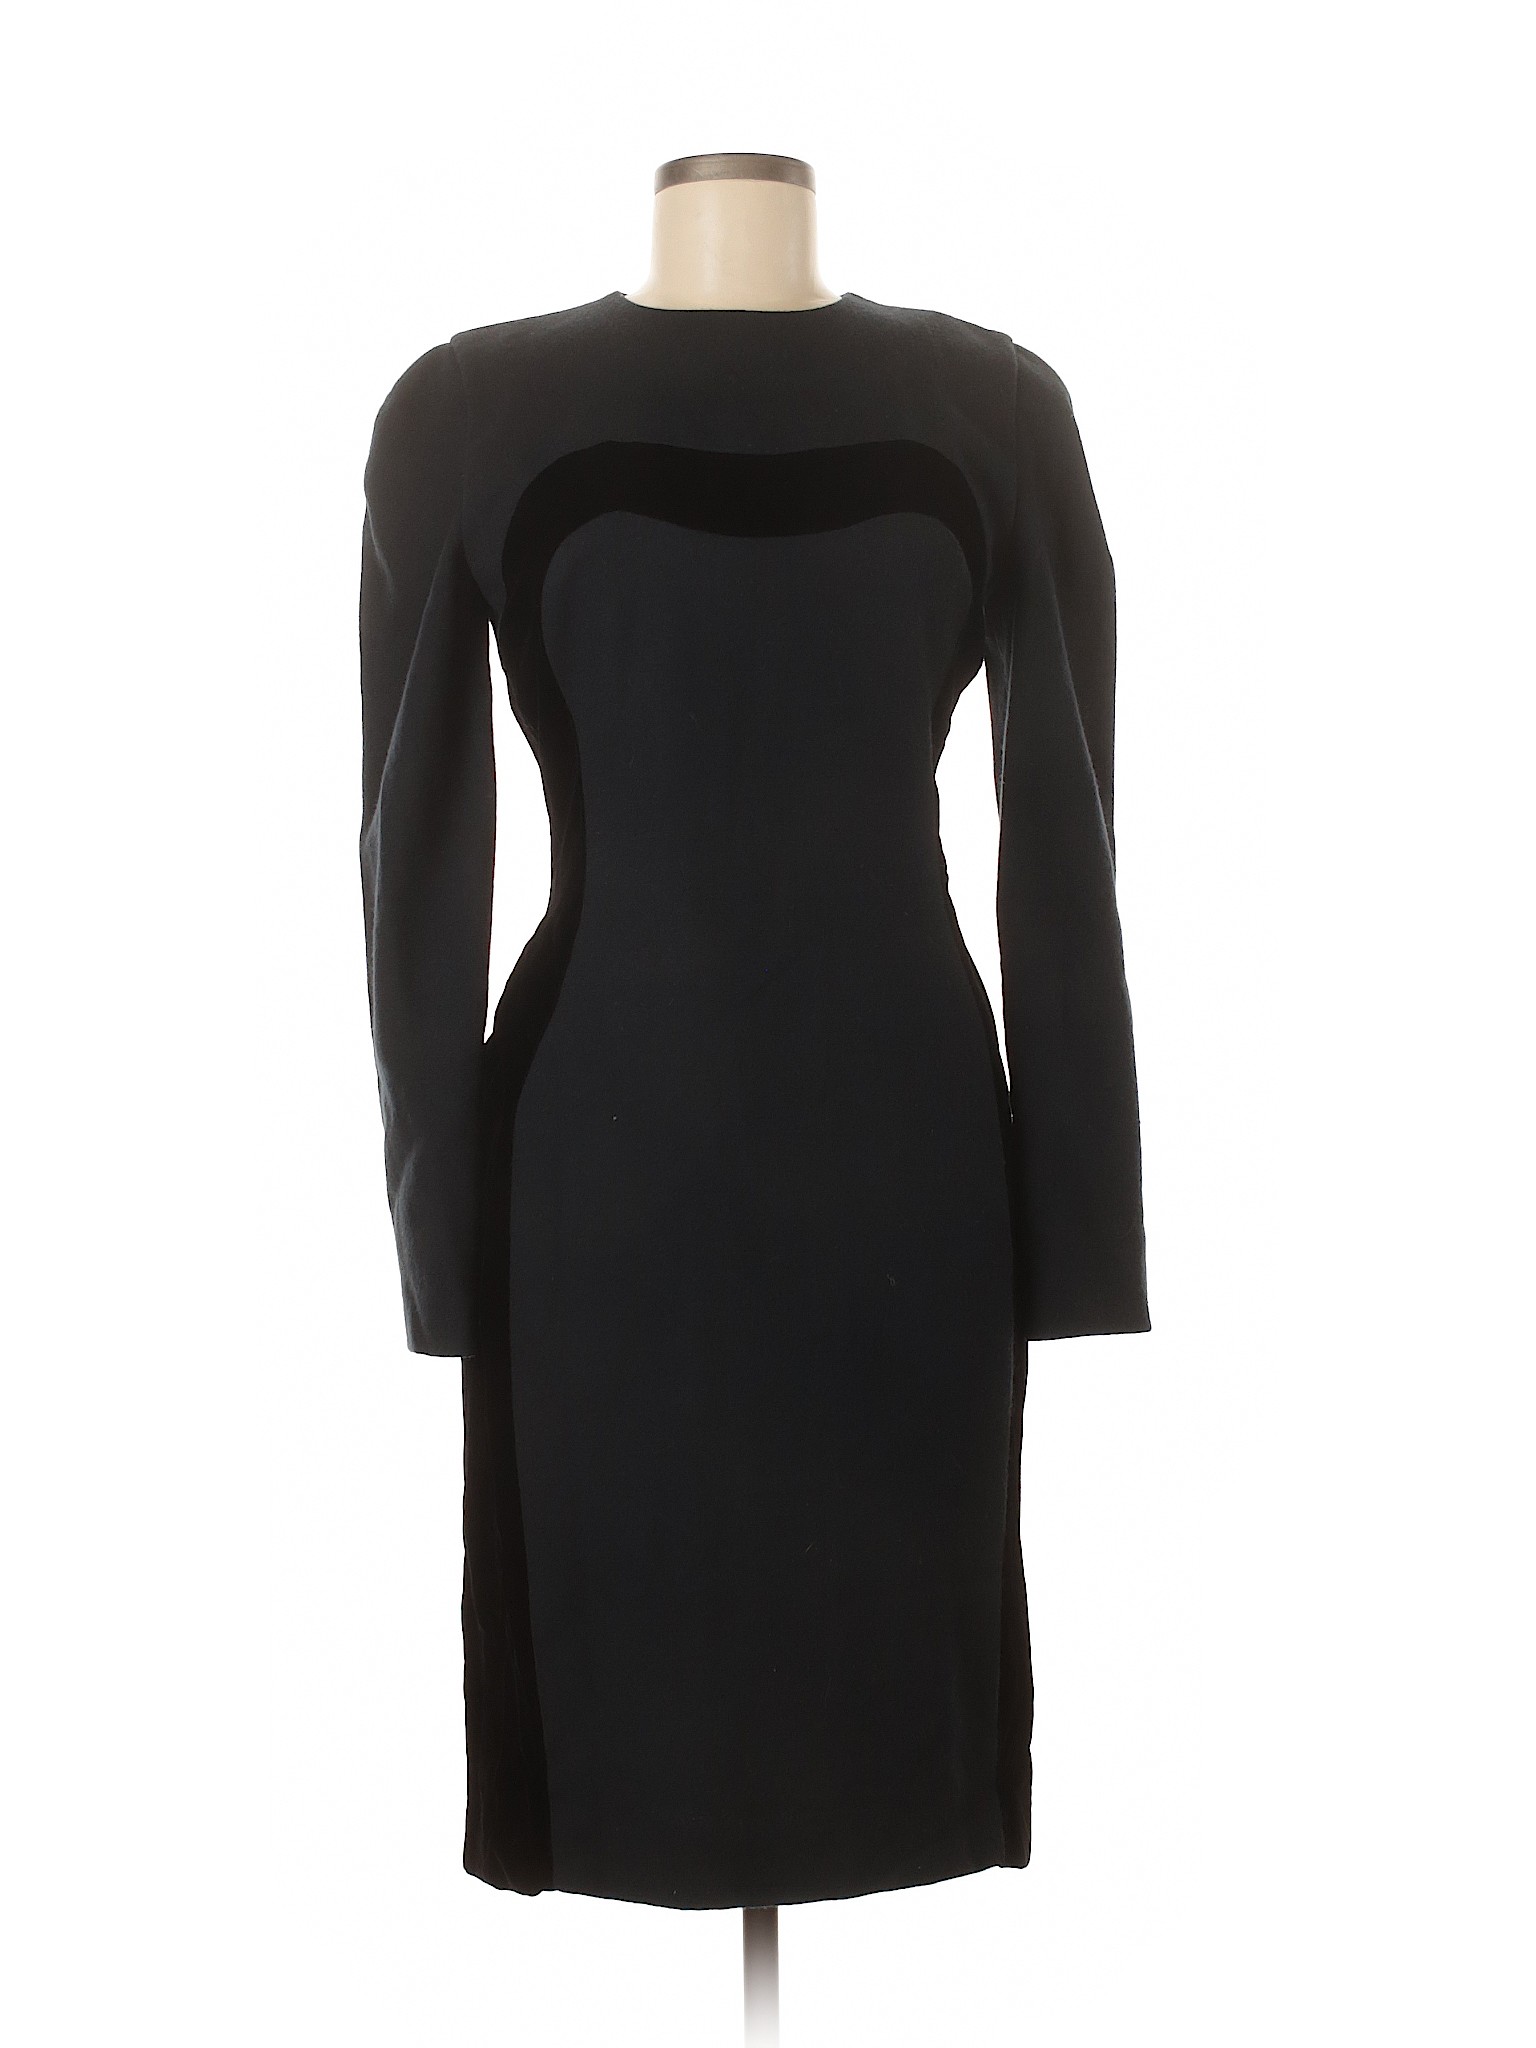 NWT Ch Carolina Herrera Women Black Cocktail Dress 6 | eBay